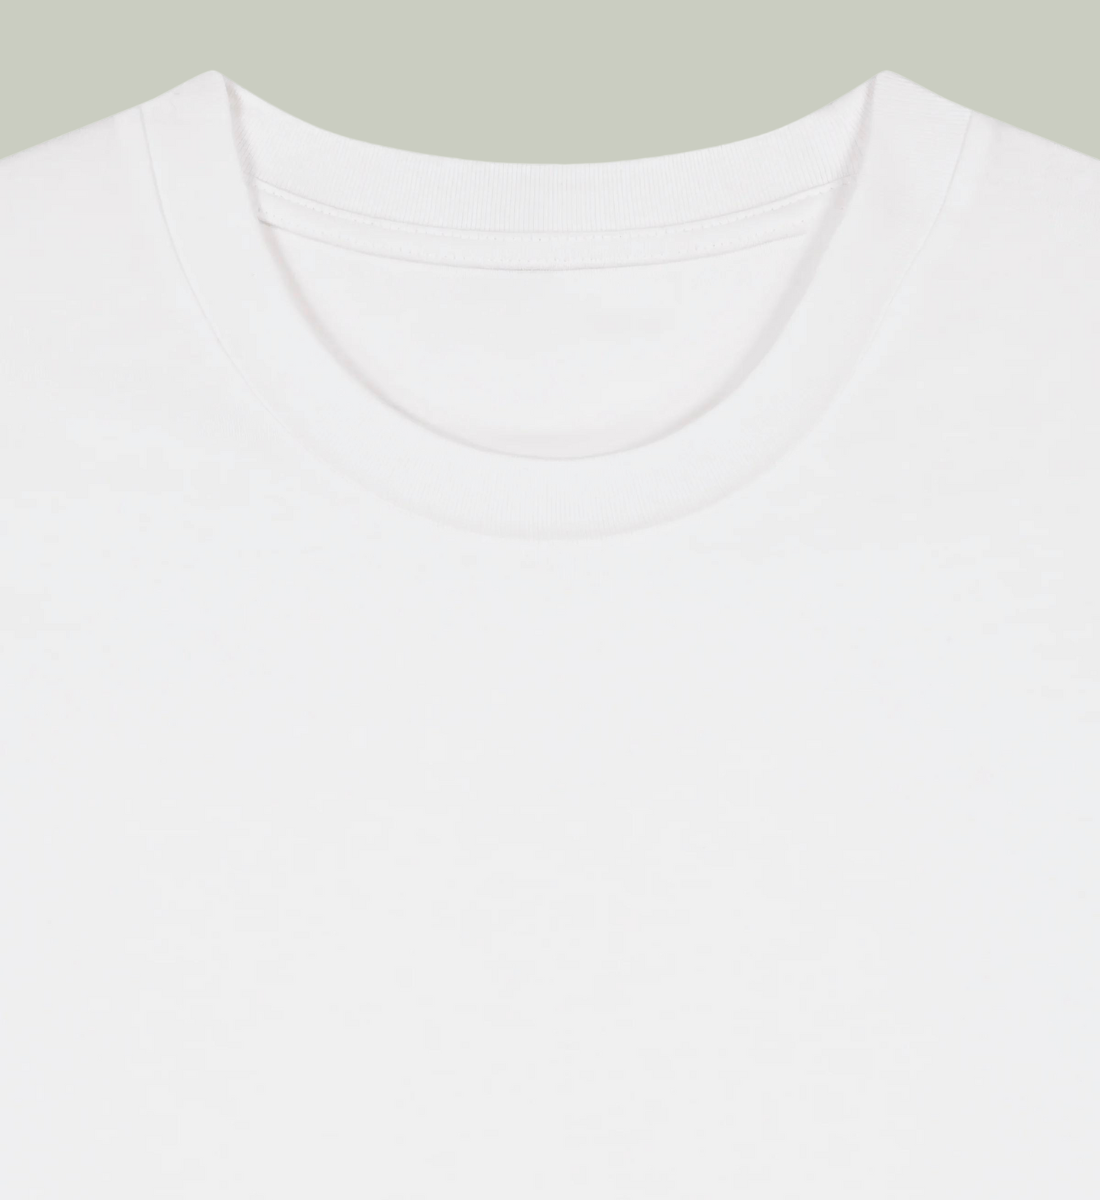 Body + Mind - Bio T-Shirt Unisex